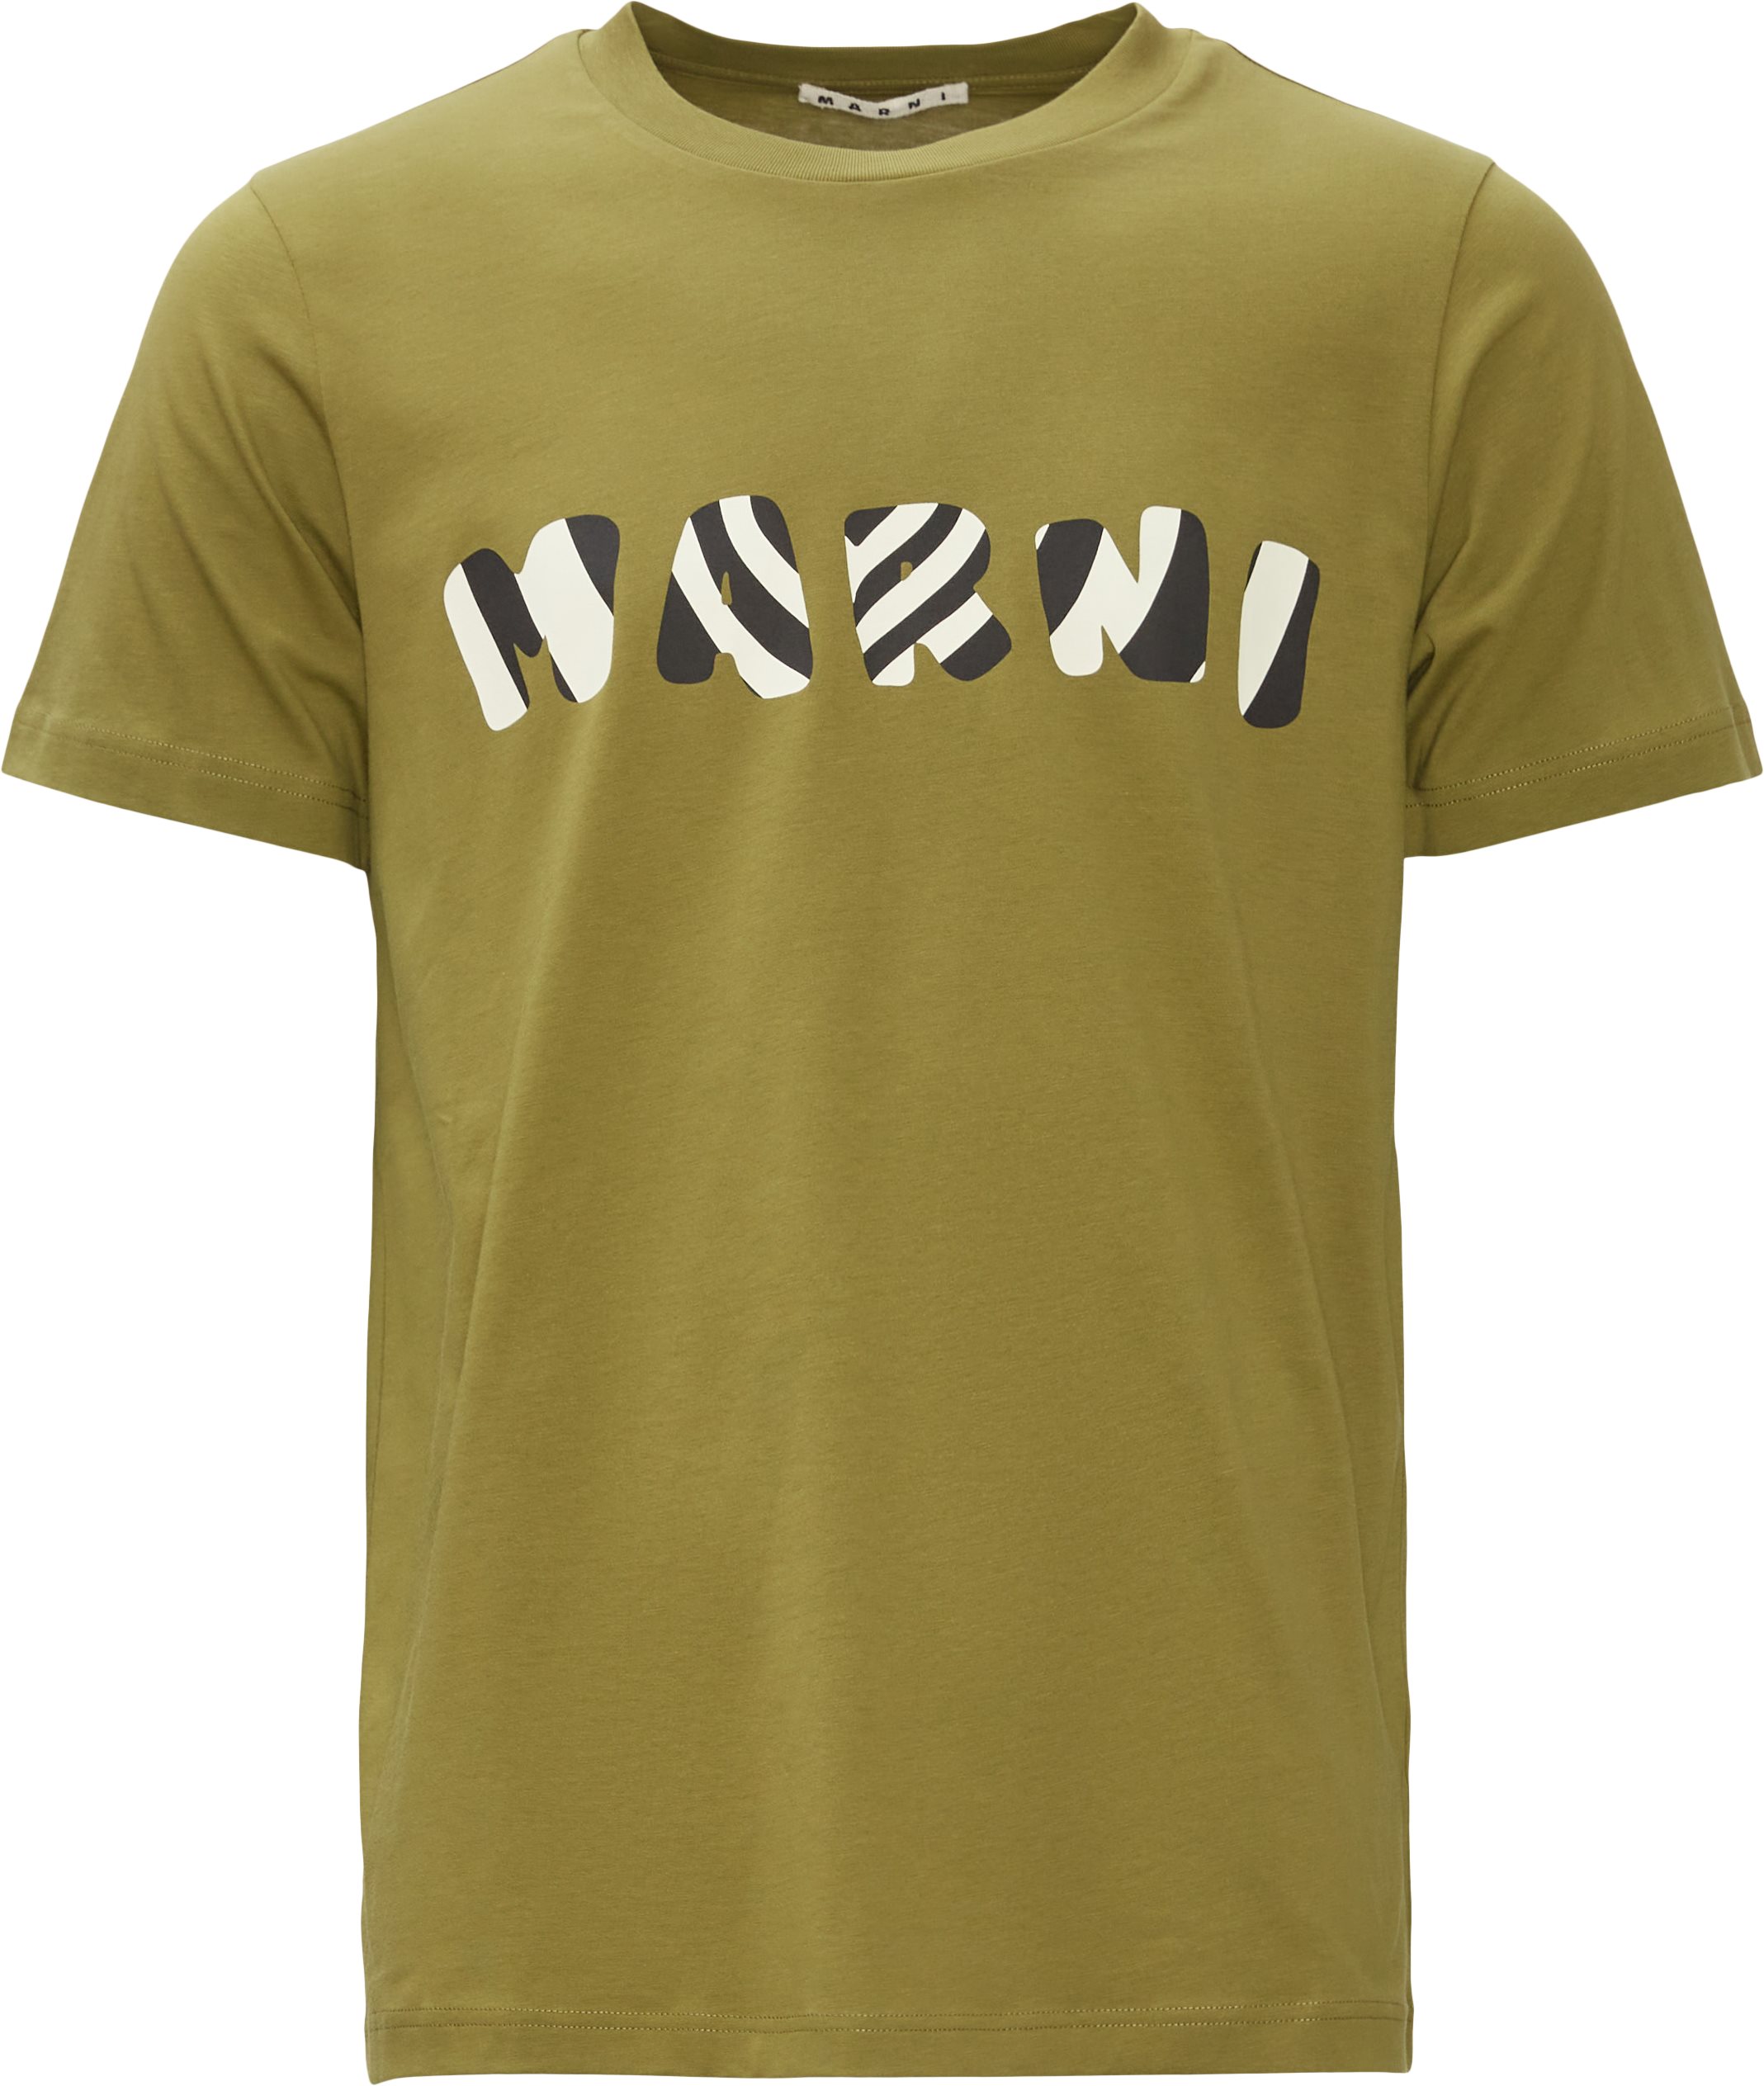 Cotton Tee logo - T-shirts - Regular fit - Army